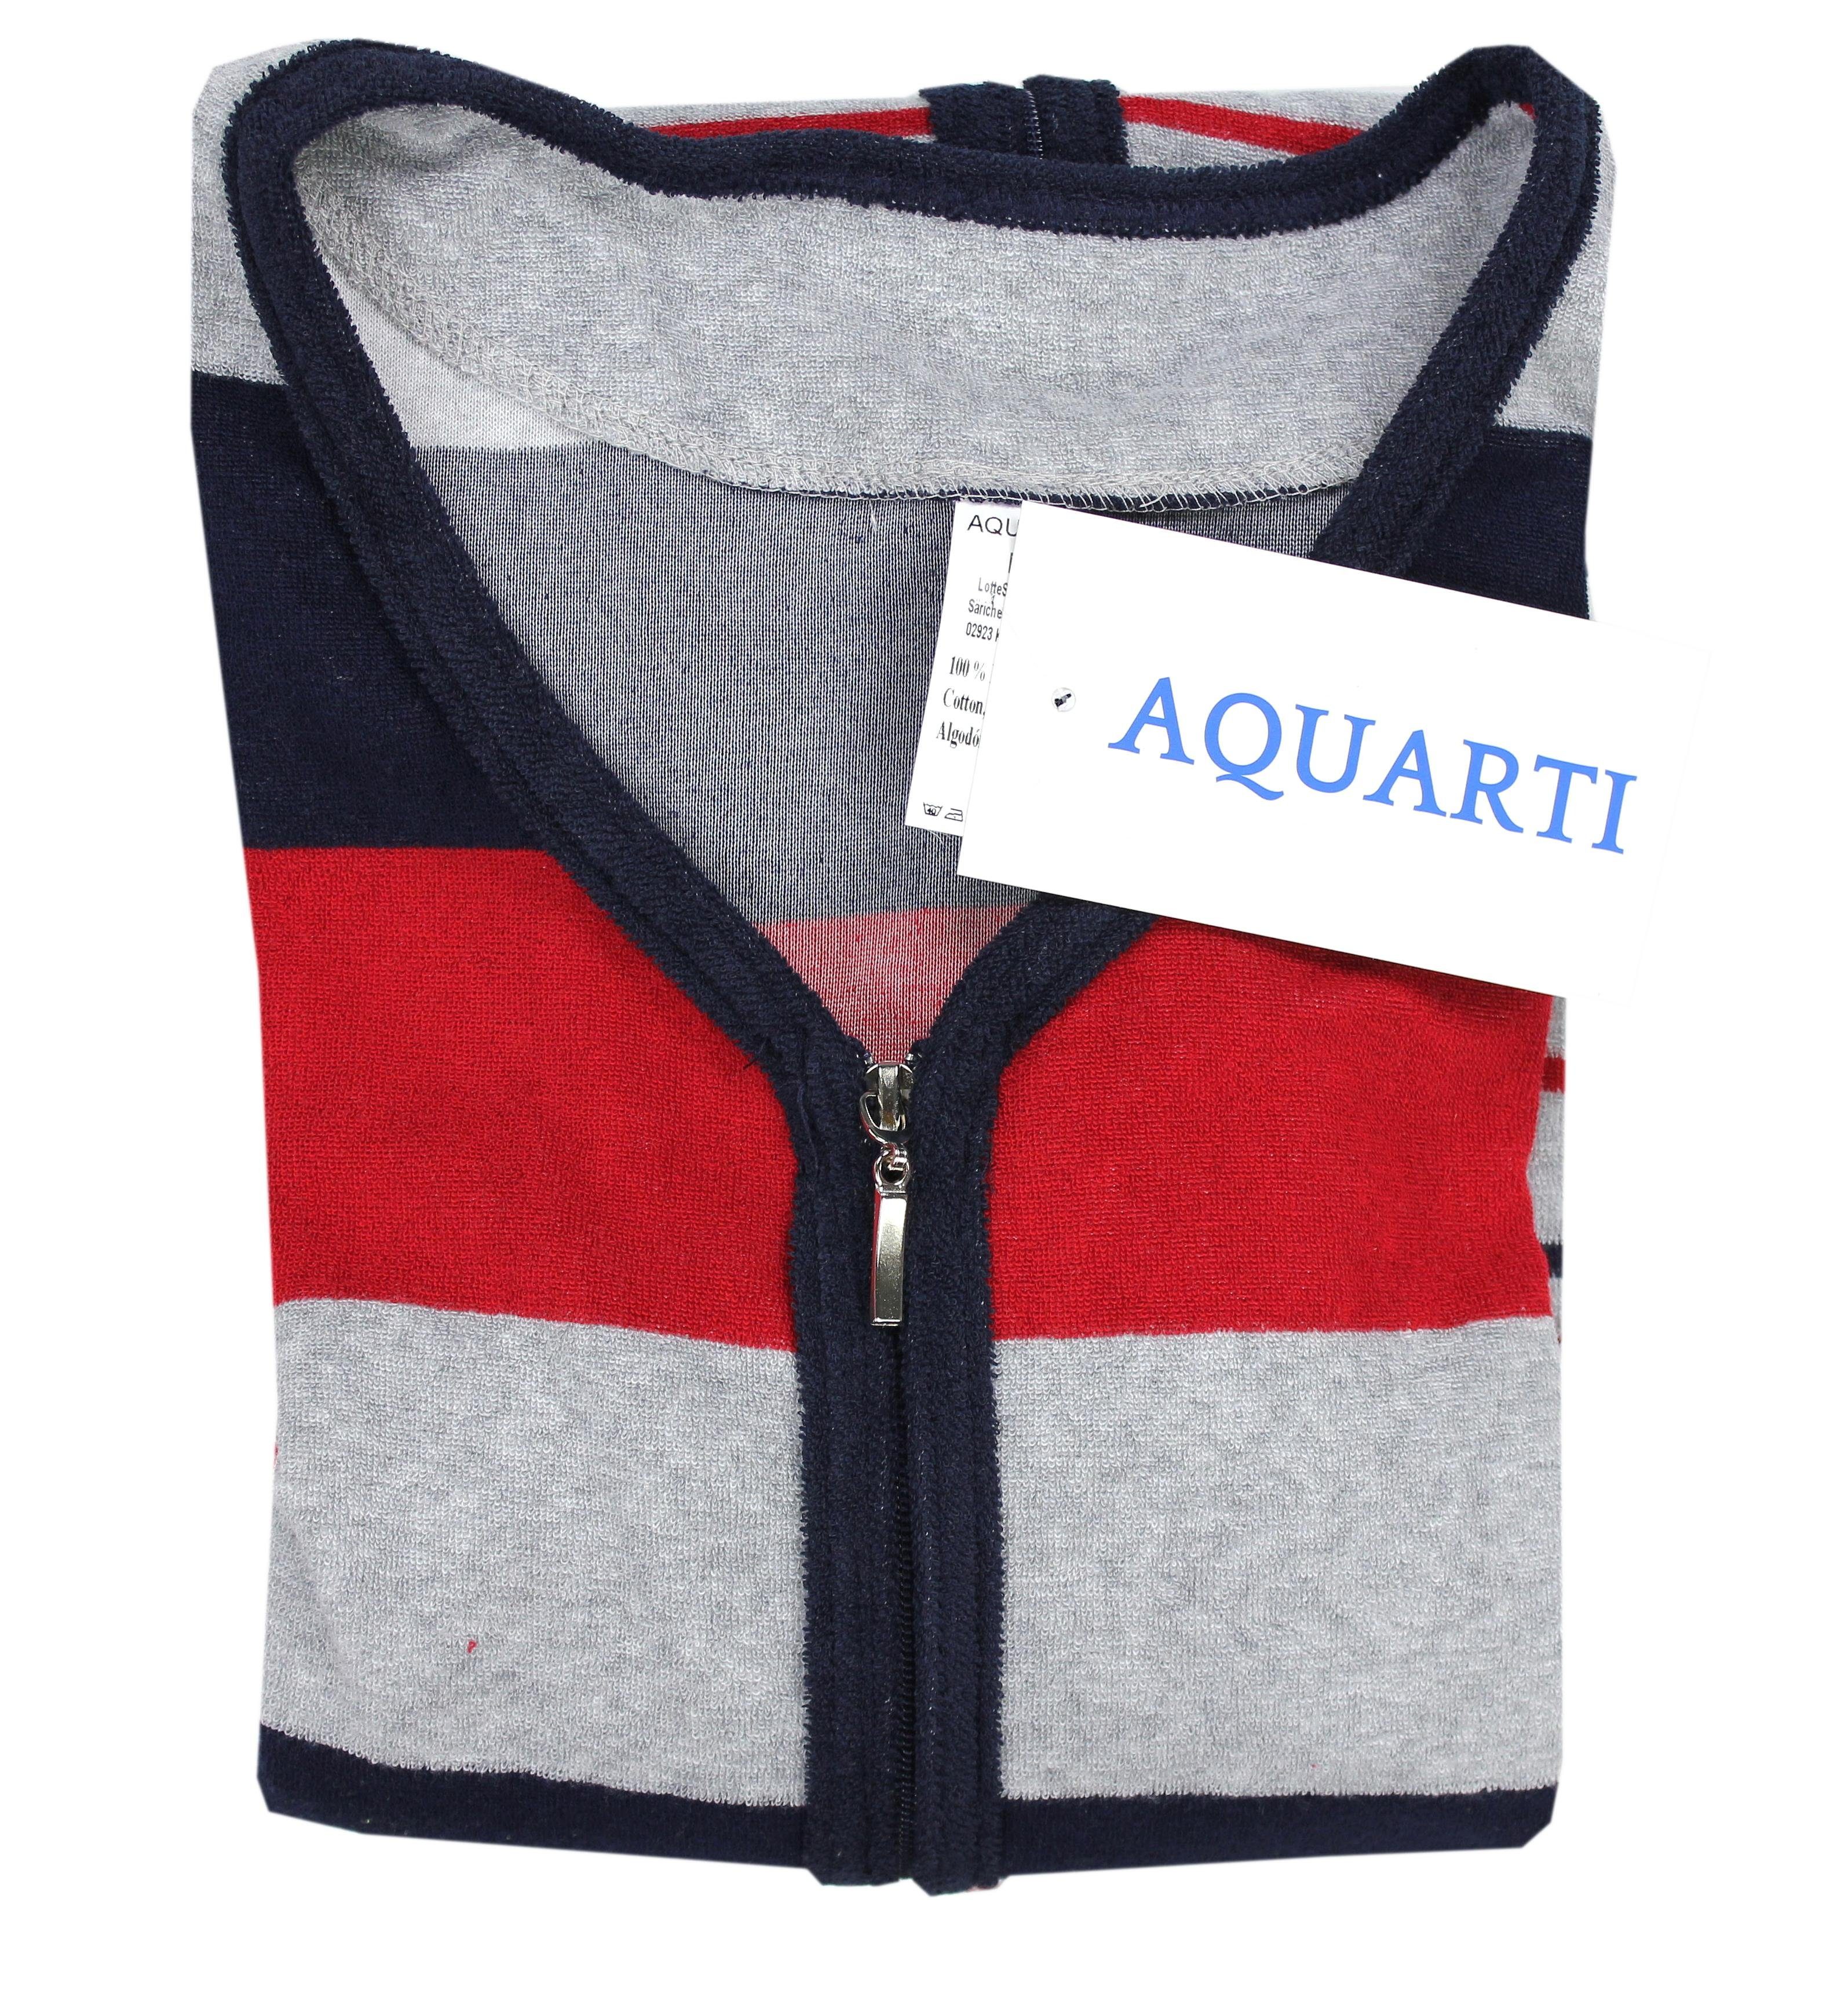 Aquarti Damenbademantel Aquarti Streifen Kurz Dunkelblau / Morgenmantel Rot mit Reißverschluss Damen